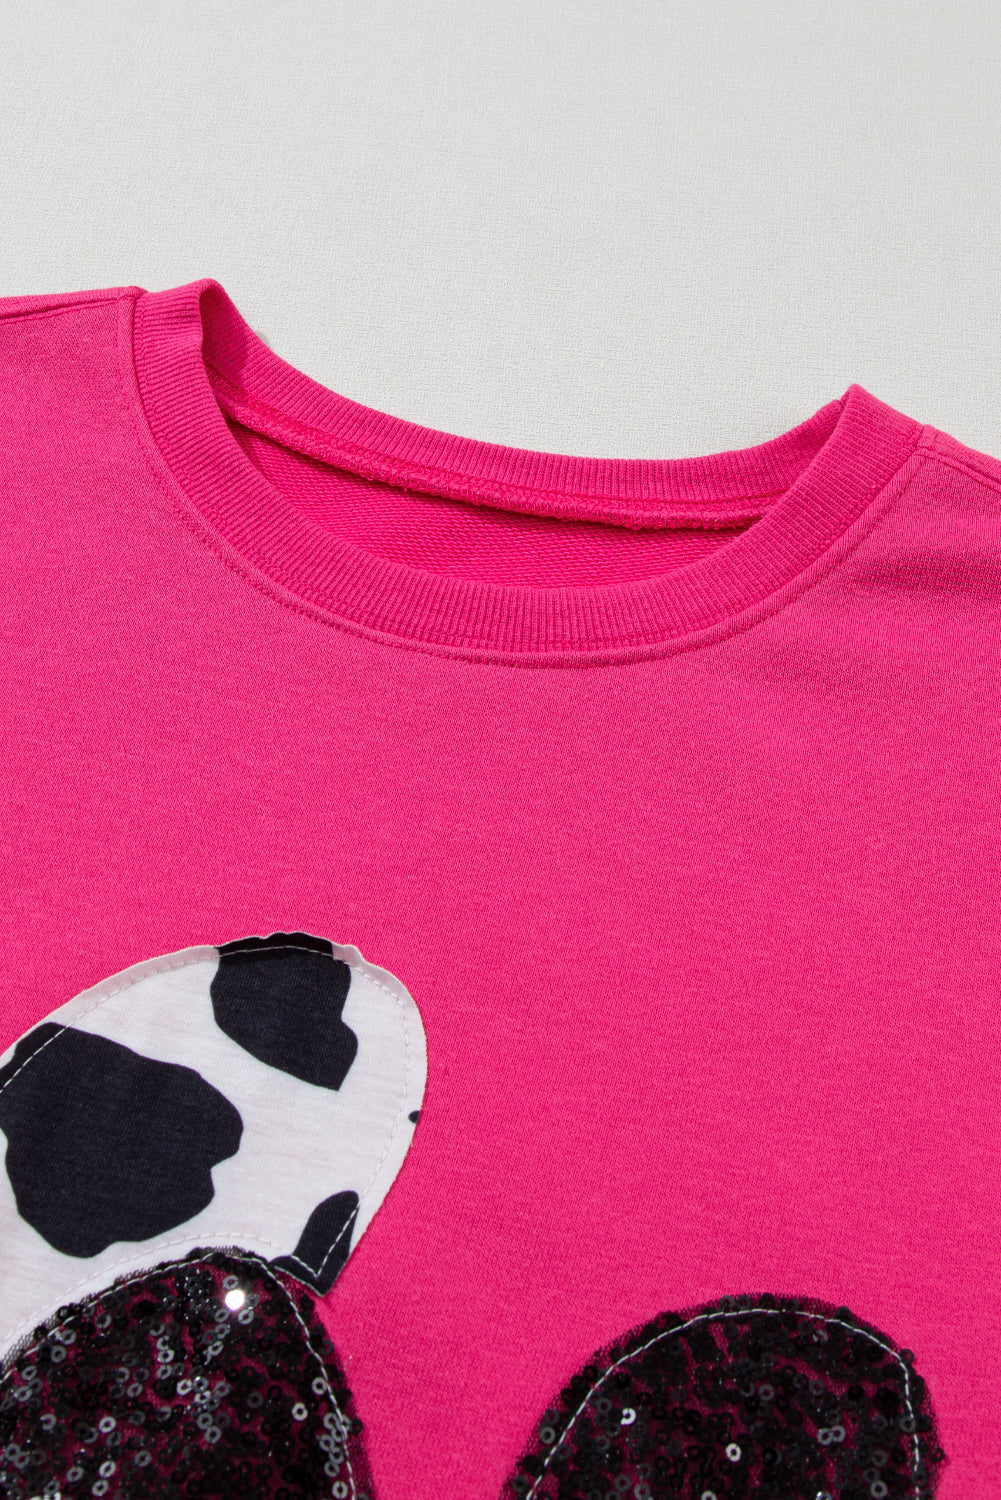 Krava jagodasto ružičasta i šljokičasta majica s dvostrukim zakrpama u obliku srca